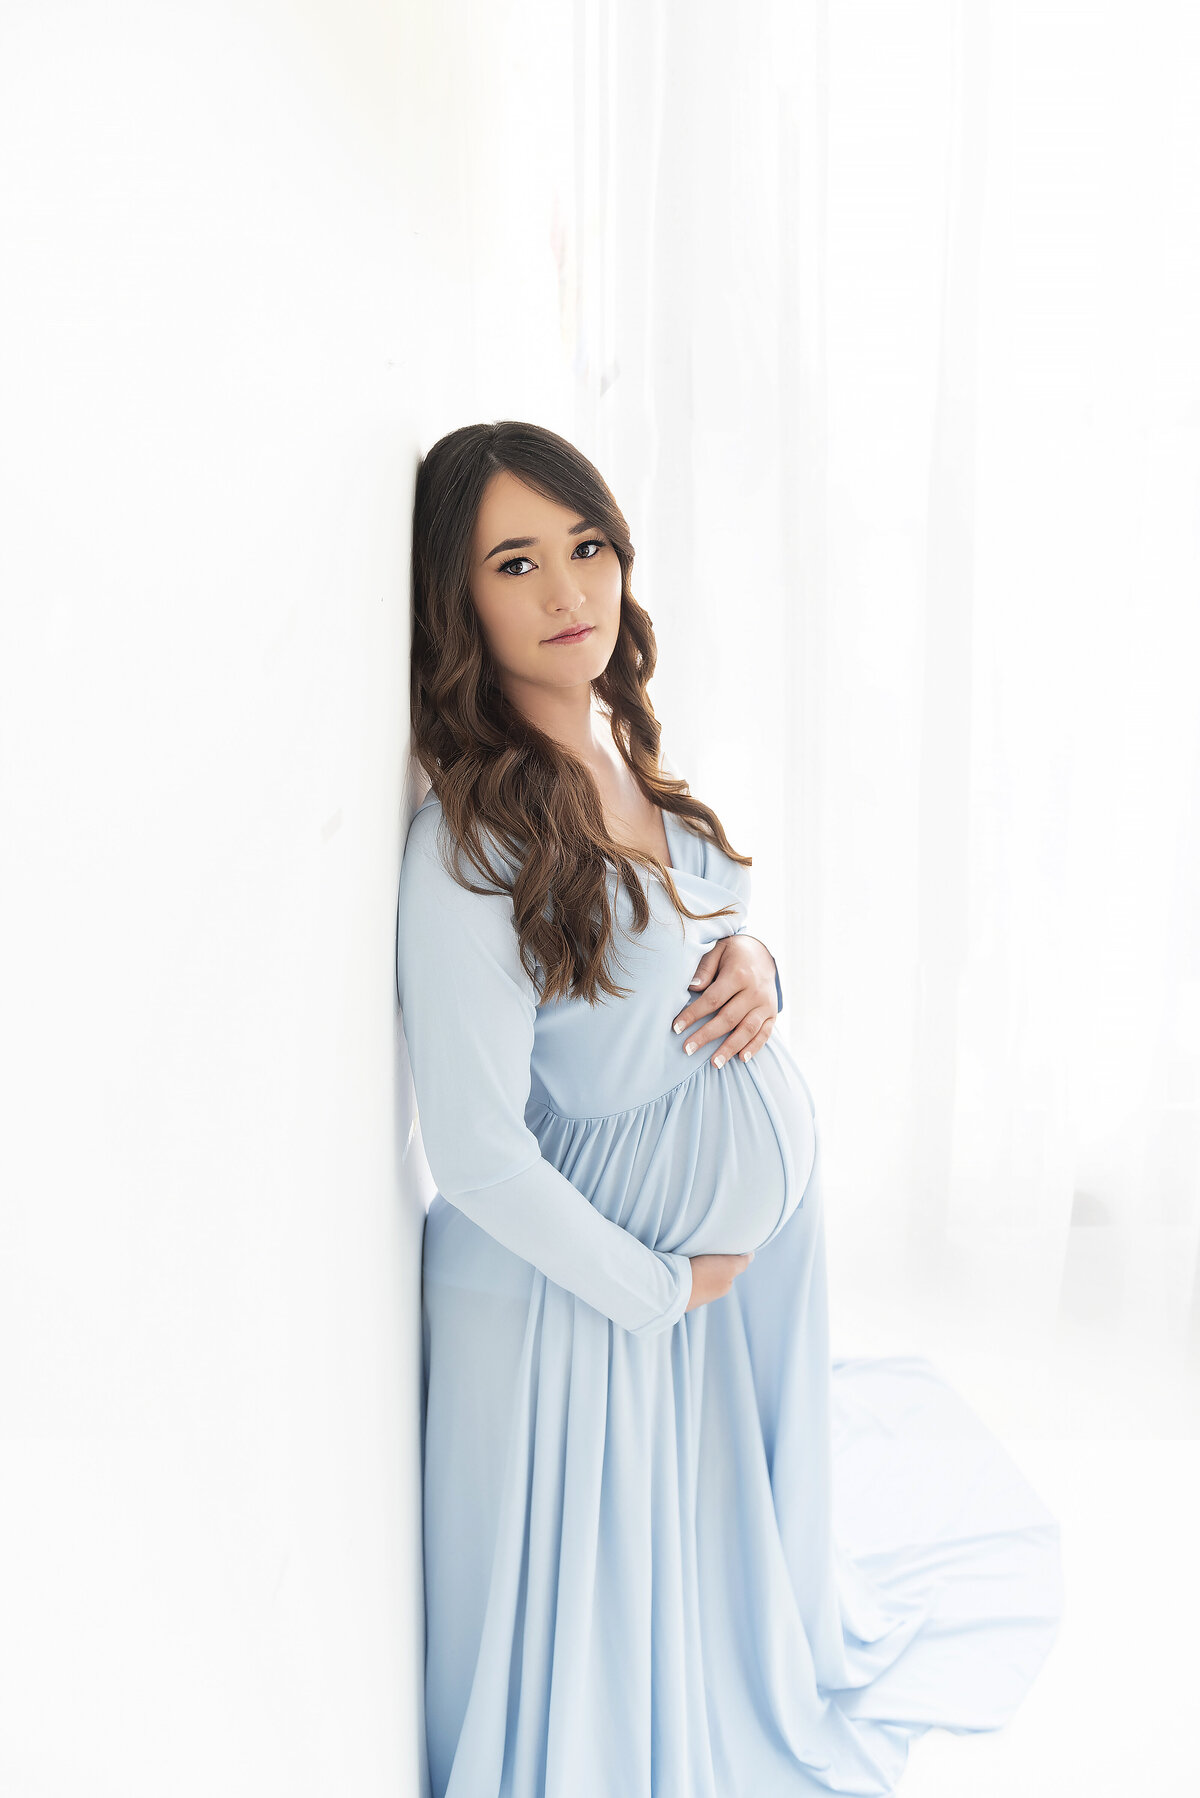 atlanta maternity photographer photographs beautiful pregnant mom